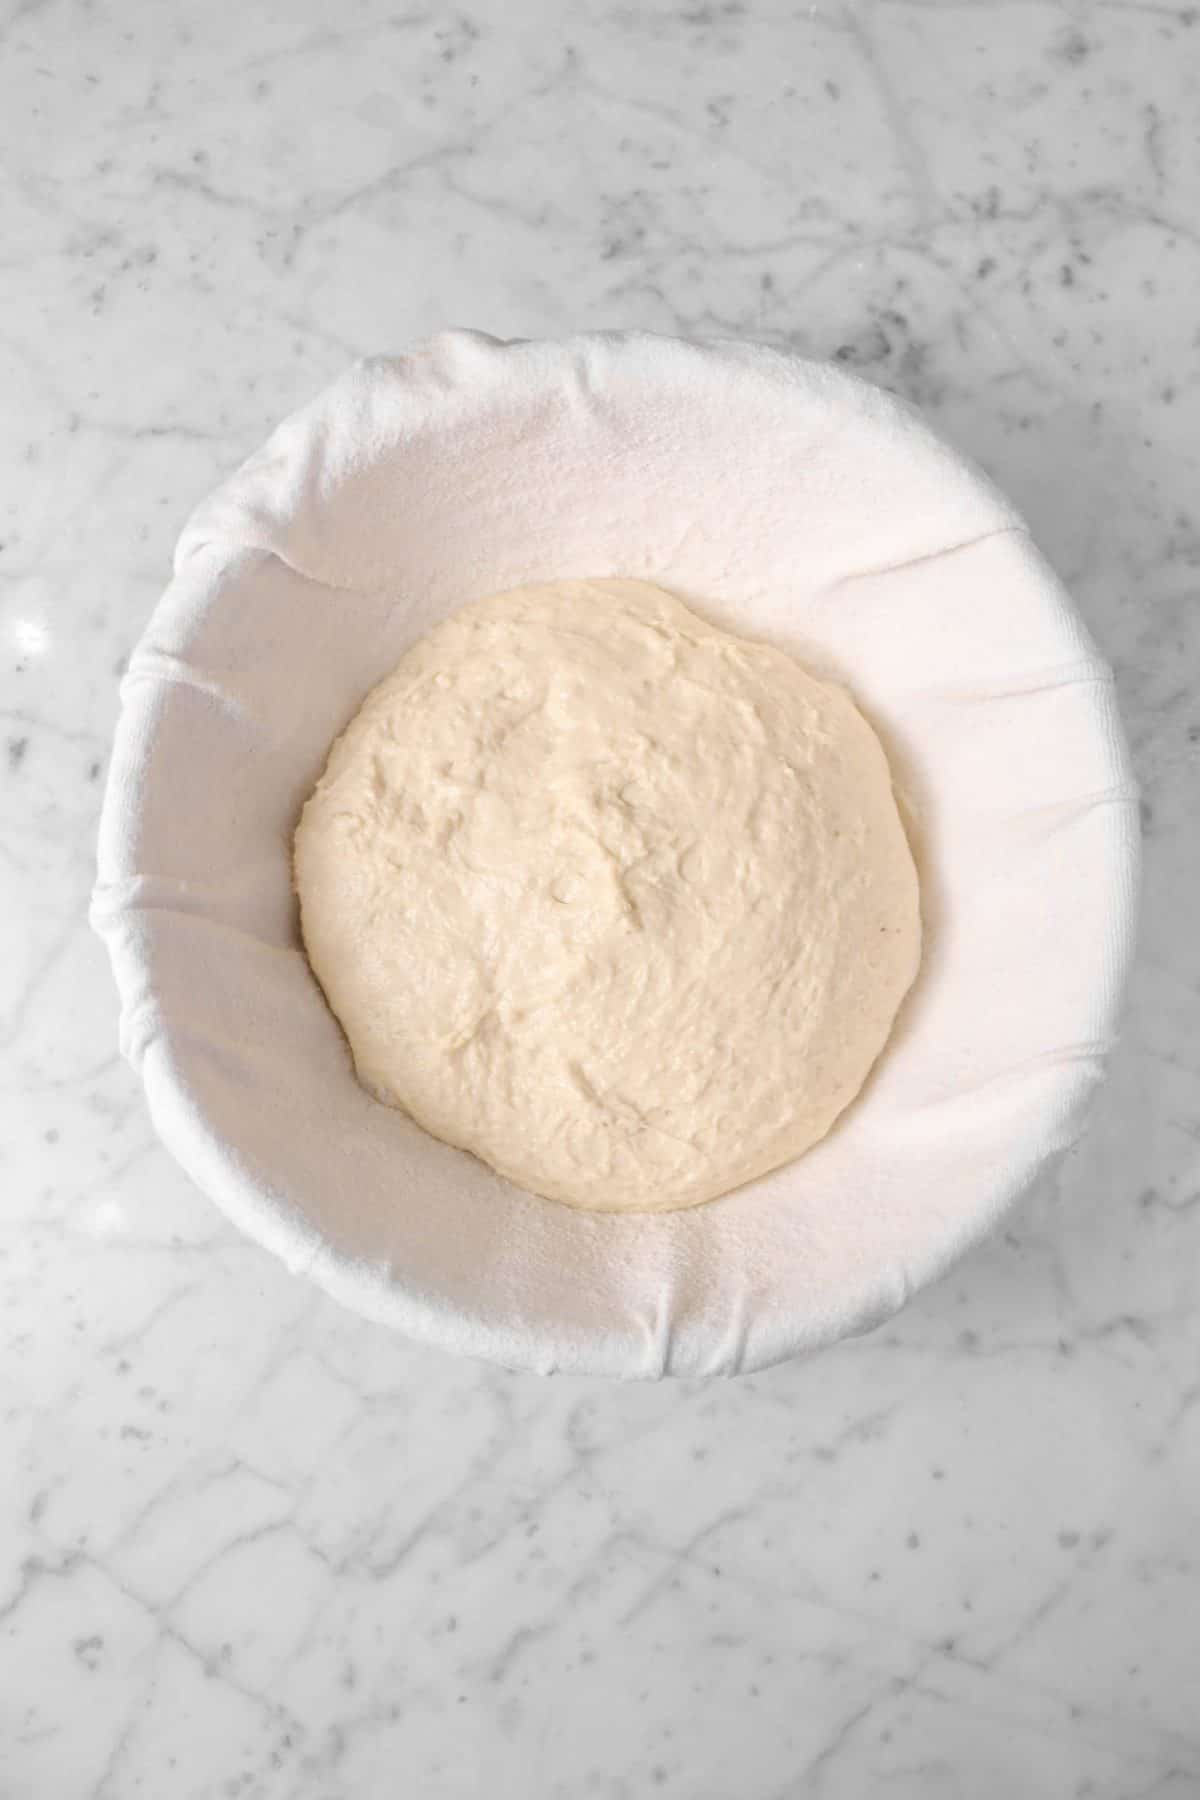 dough placed in a floured banneton